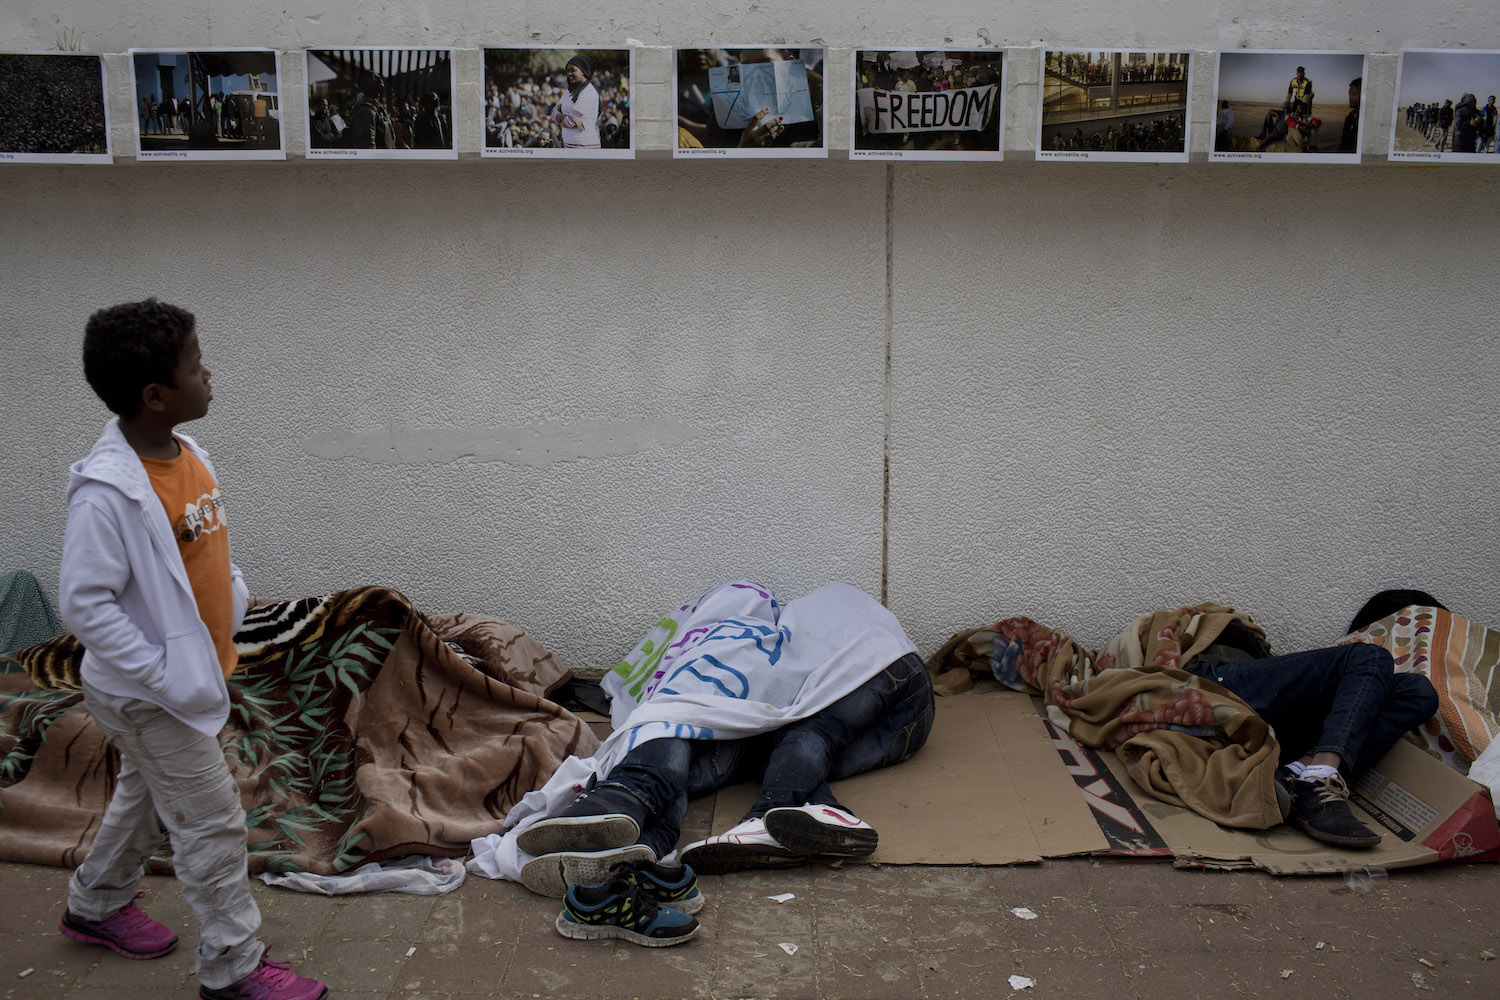 African asylum seekers sleep near an Activestills photo exhibition on the asylum seekers' struggle in Israel, Levinsky Park, South Tel Aviv, February 4, 2014. (Oren Ziv)